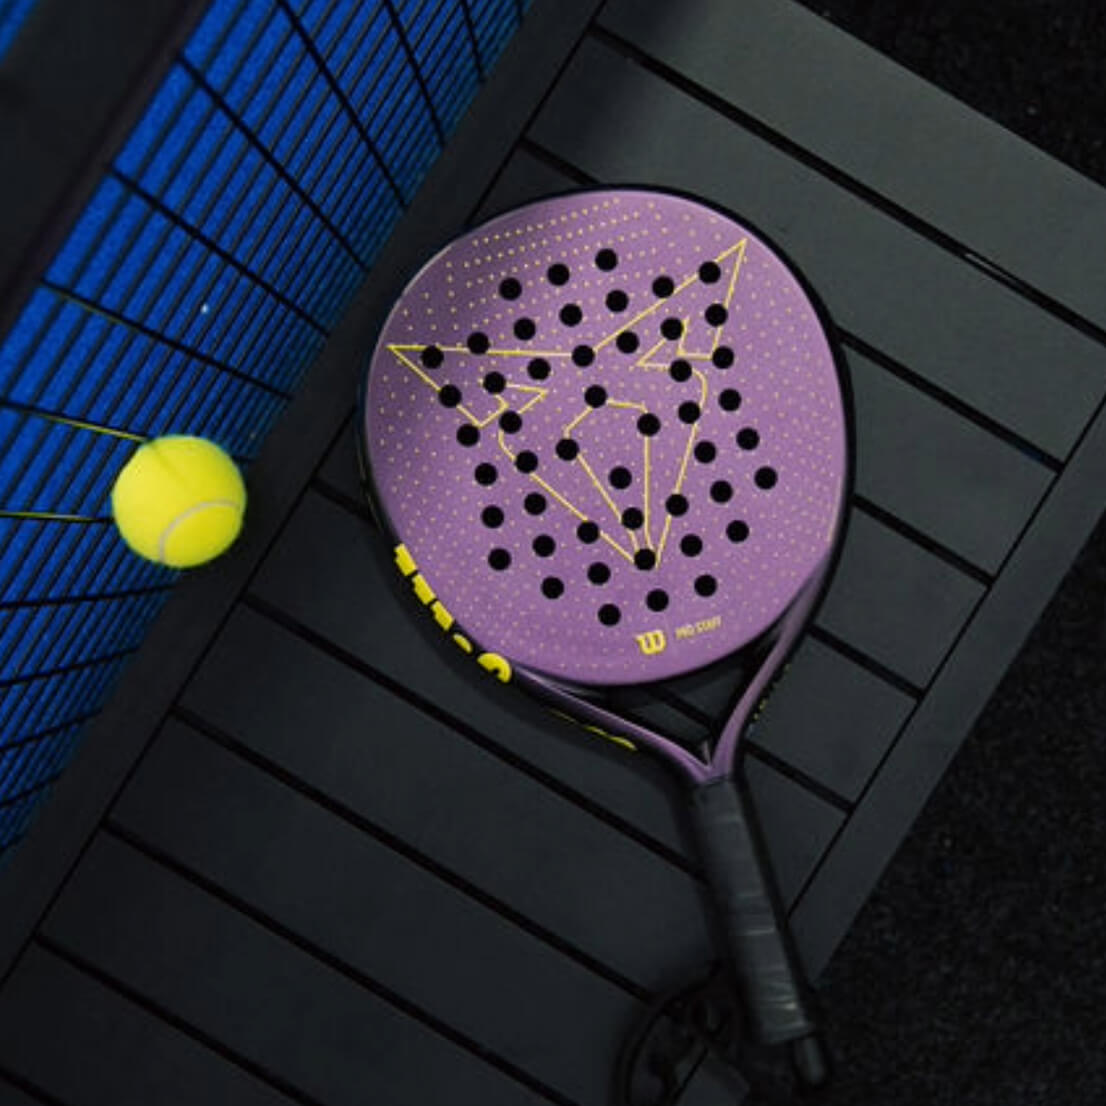 Padel racket and ball